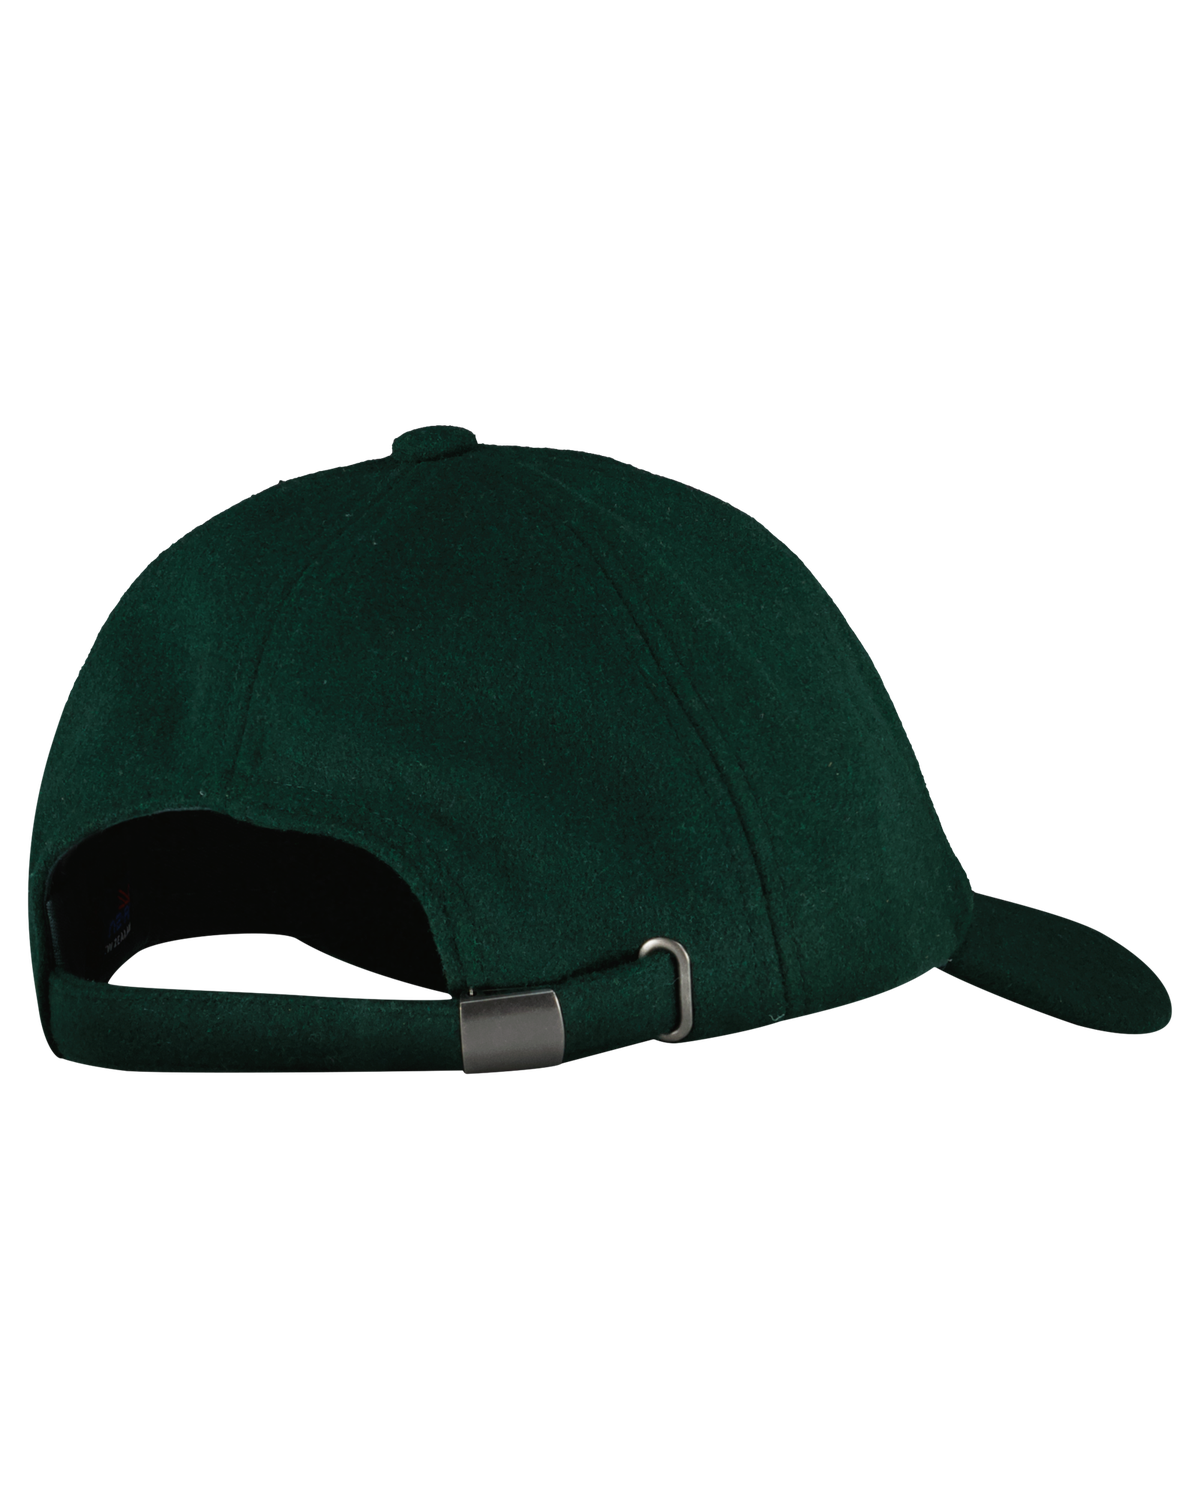 Wool cap - Crushing Green